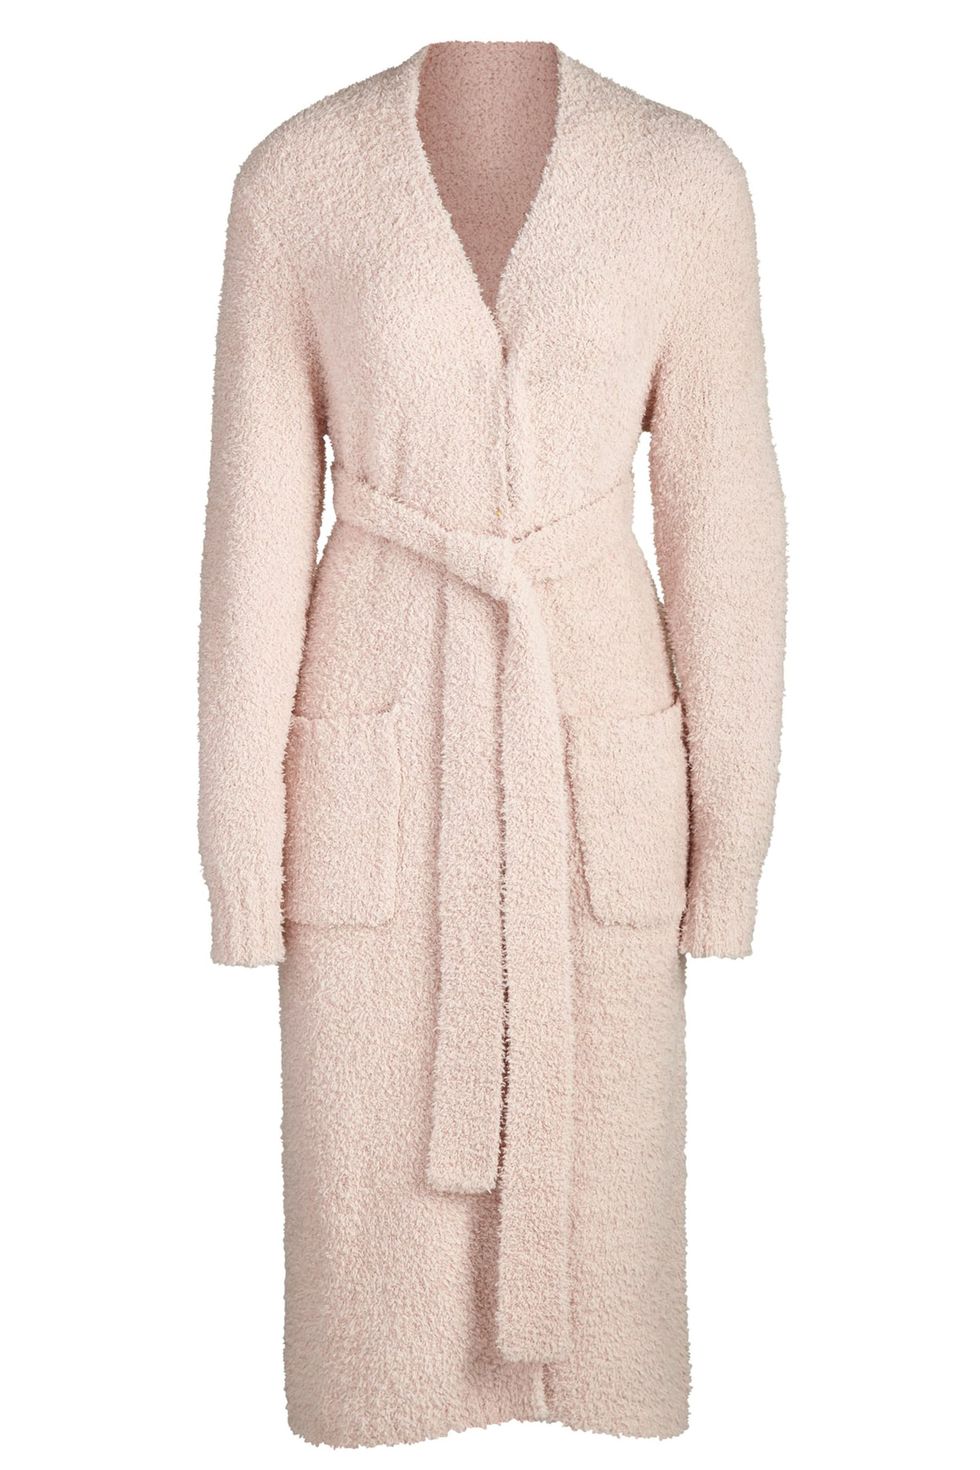  BNisBM Skims Robe Womens Plush Soft Robe Fluffy Thick